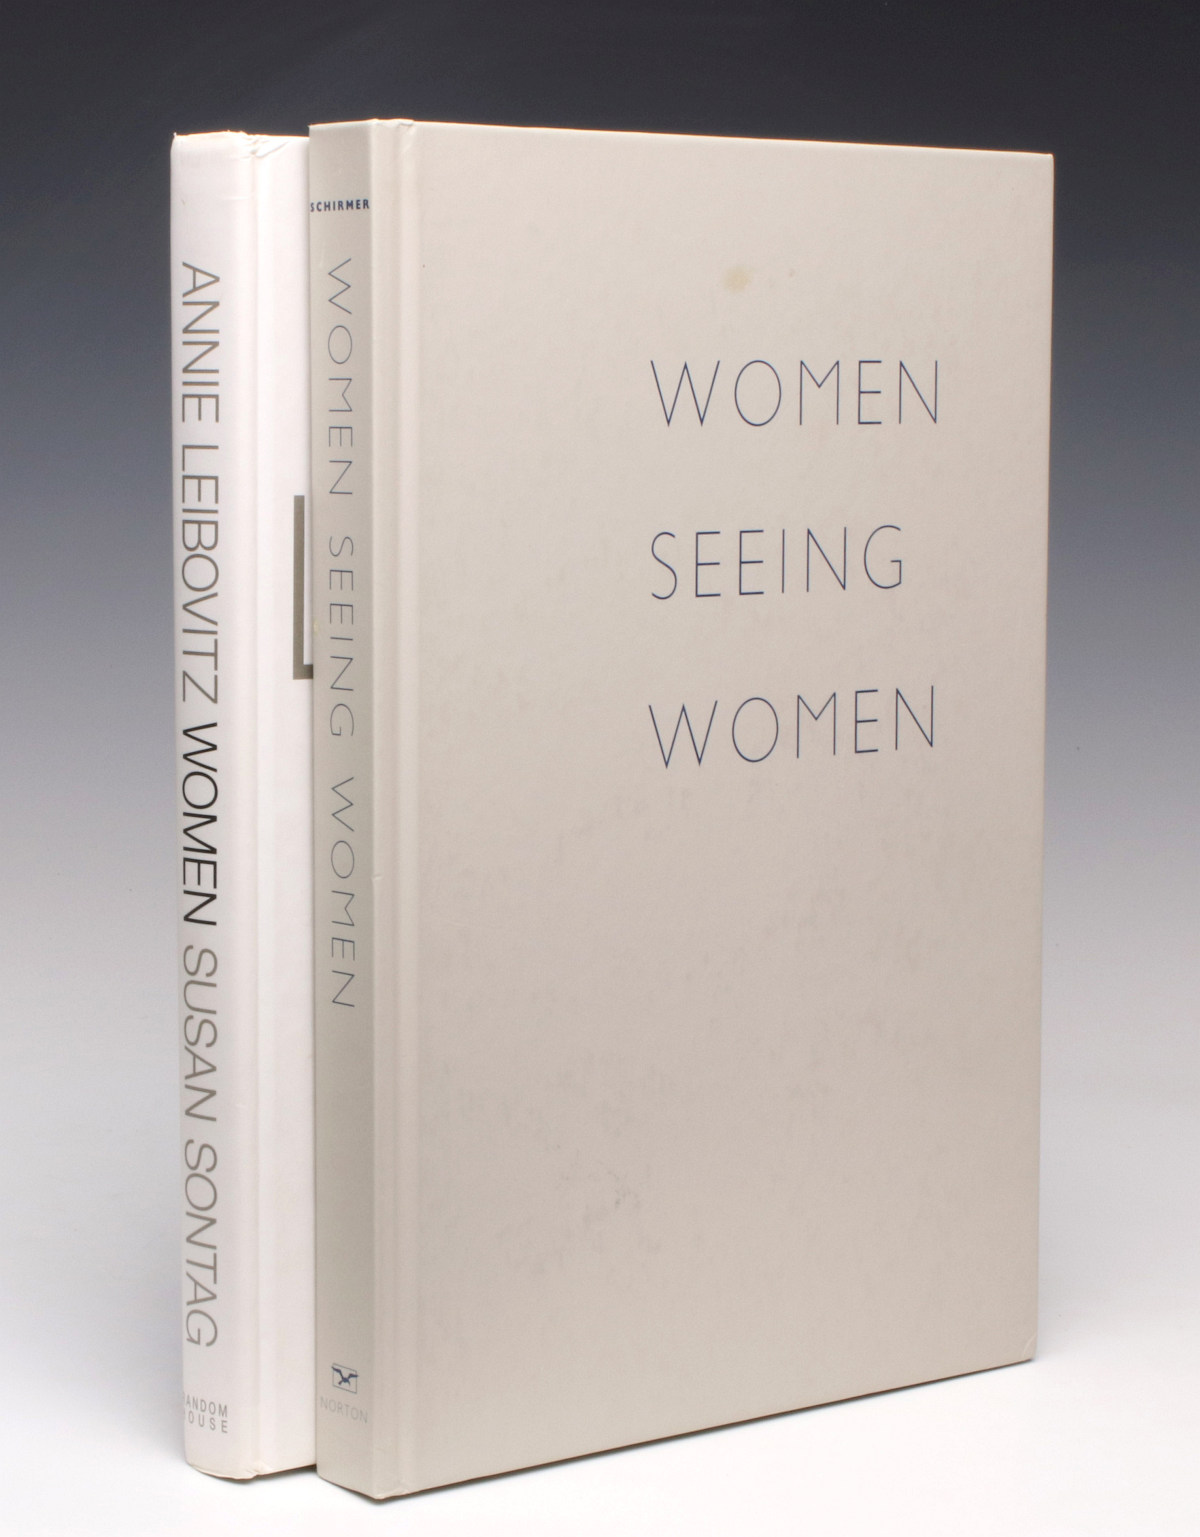 LOTHAR SCHIRMER 'WOMEN SEEING WOMEN'